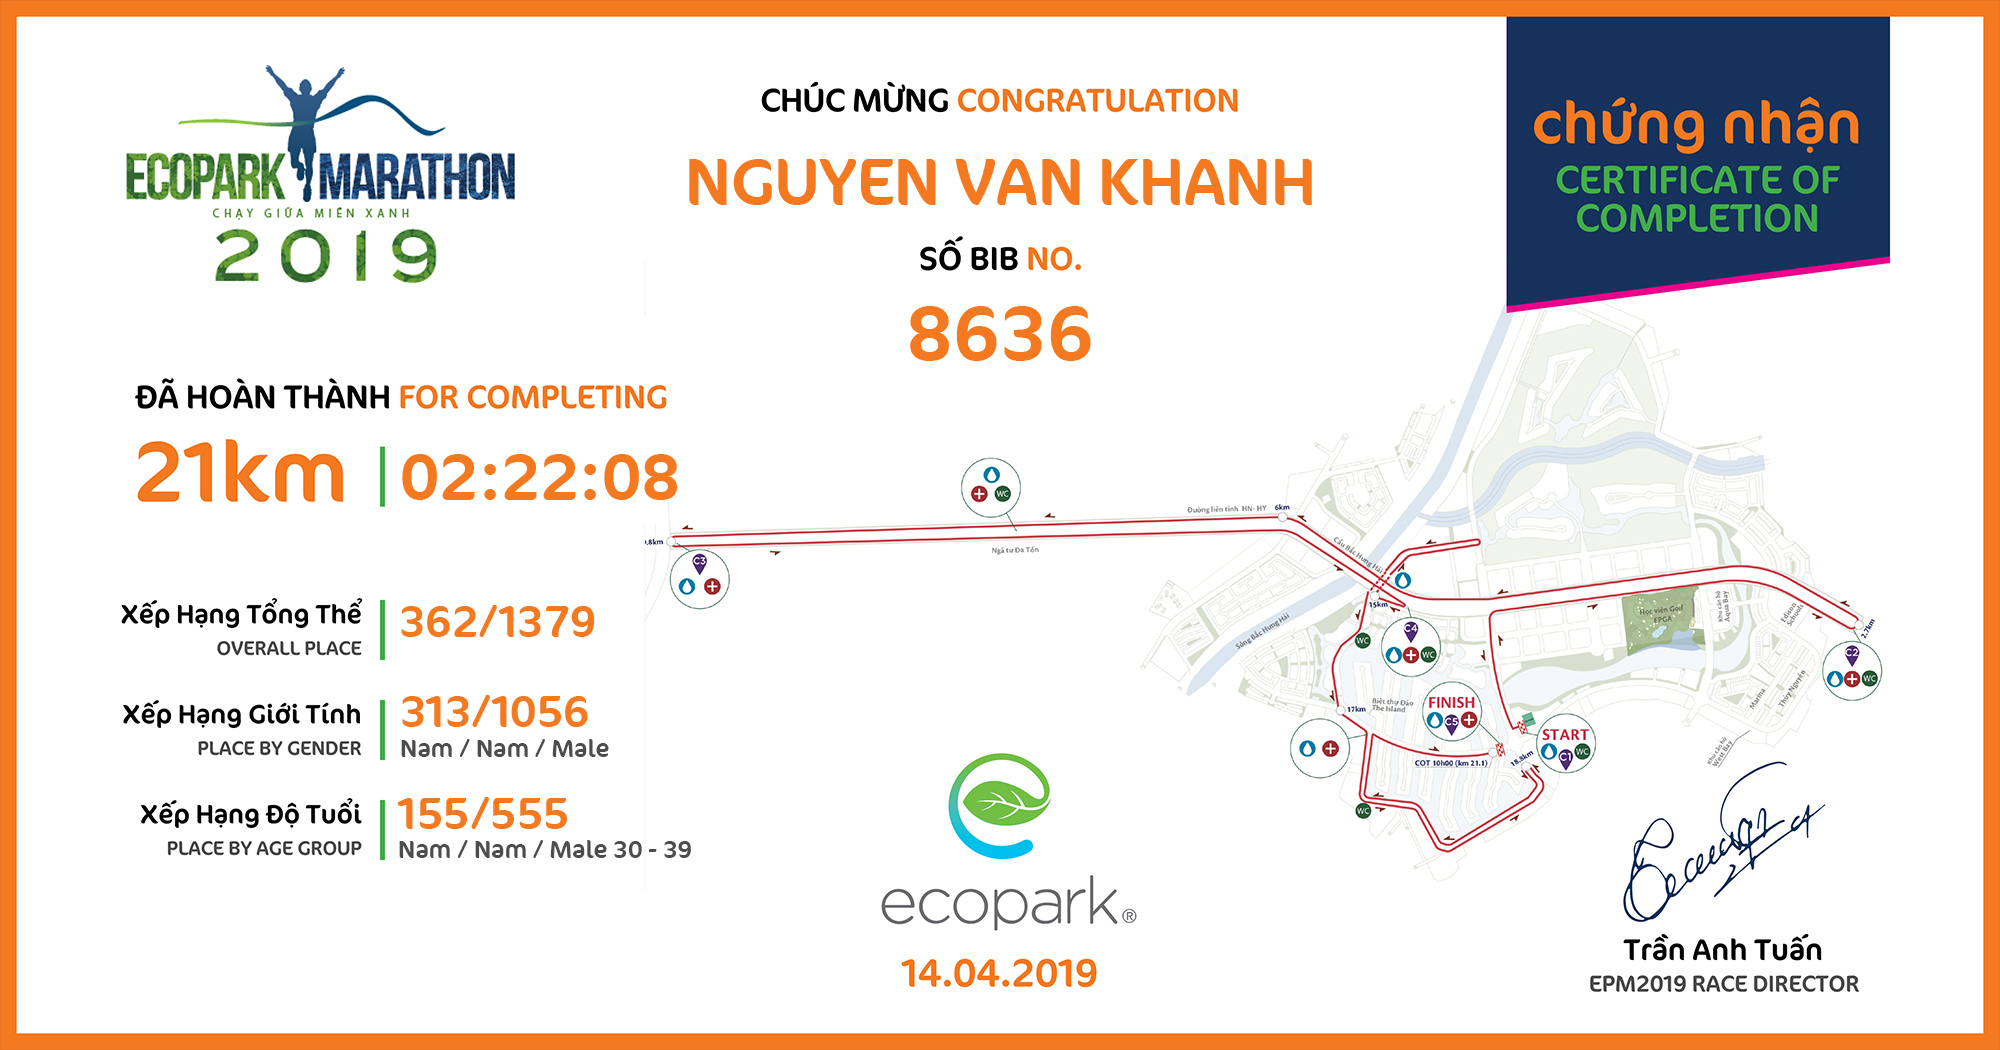 8636 - Nguyen Van Khanh